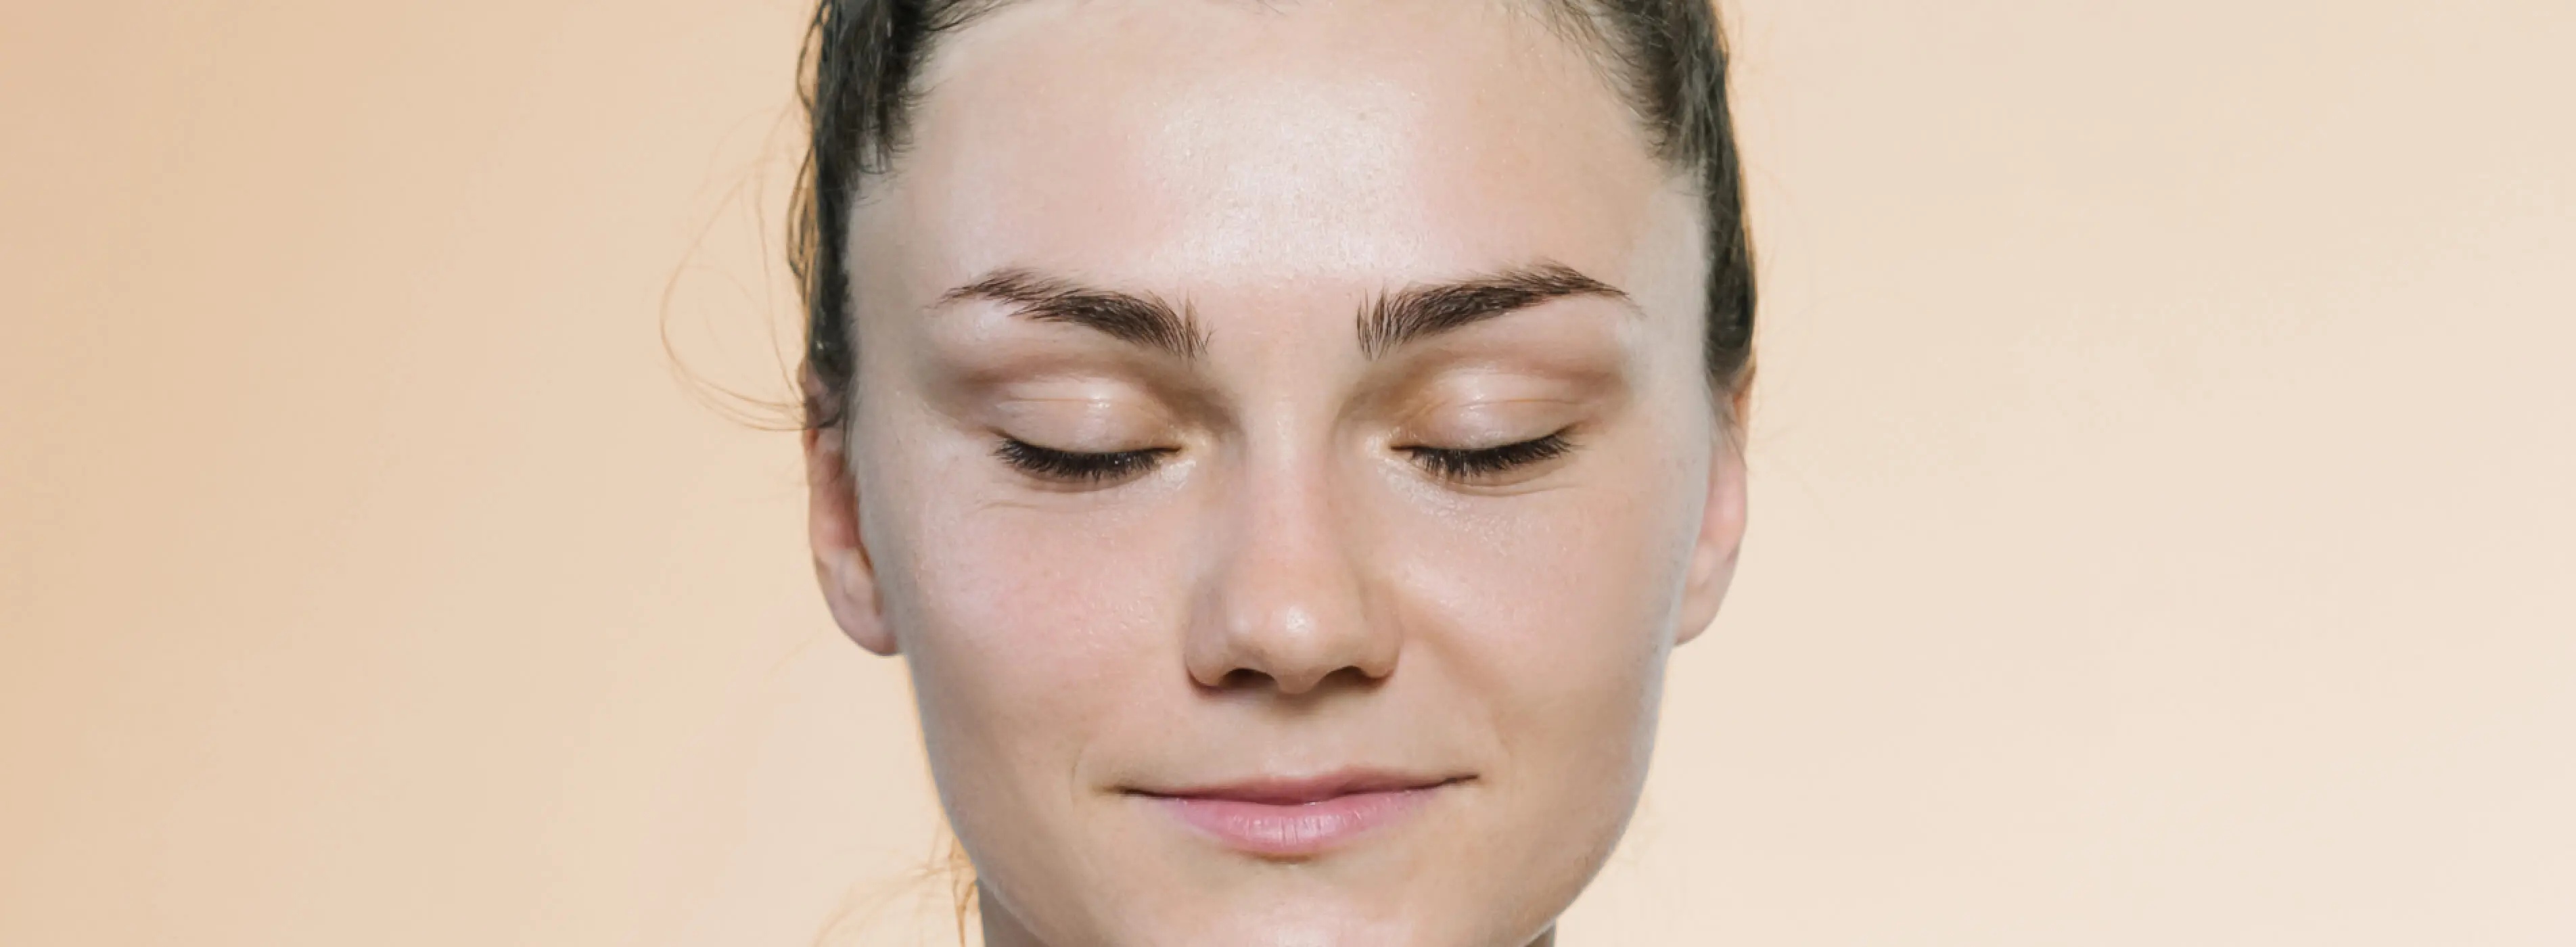 Junge Frau mit Dutt meditiert mit geschlossenen Augen